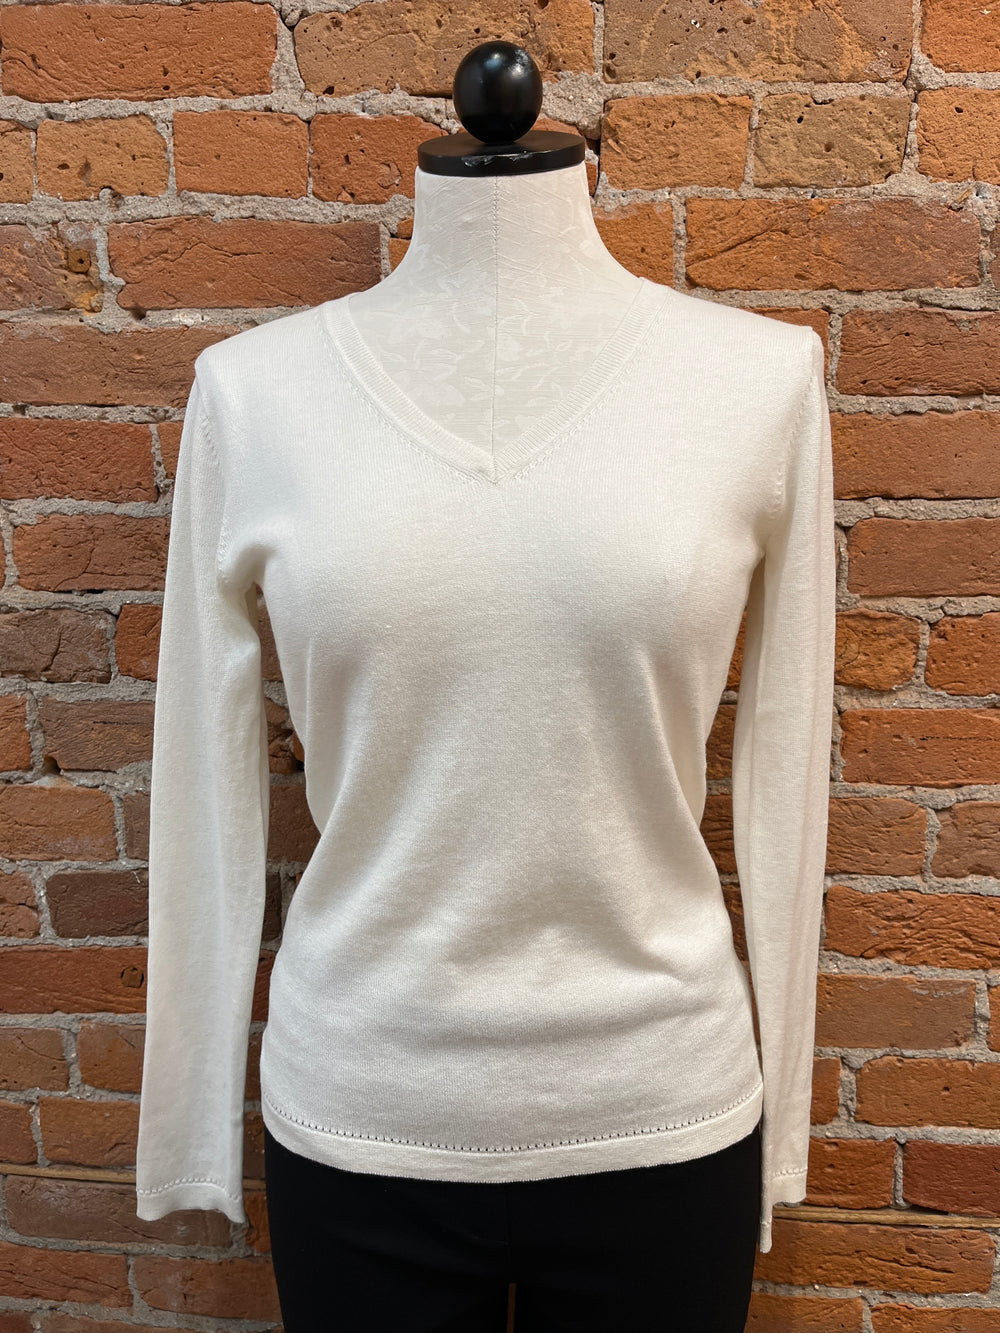 Alashan sweater, cotton cashmere v-neck